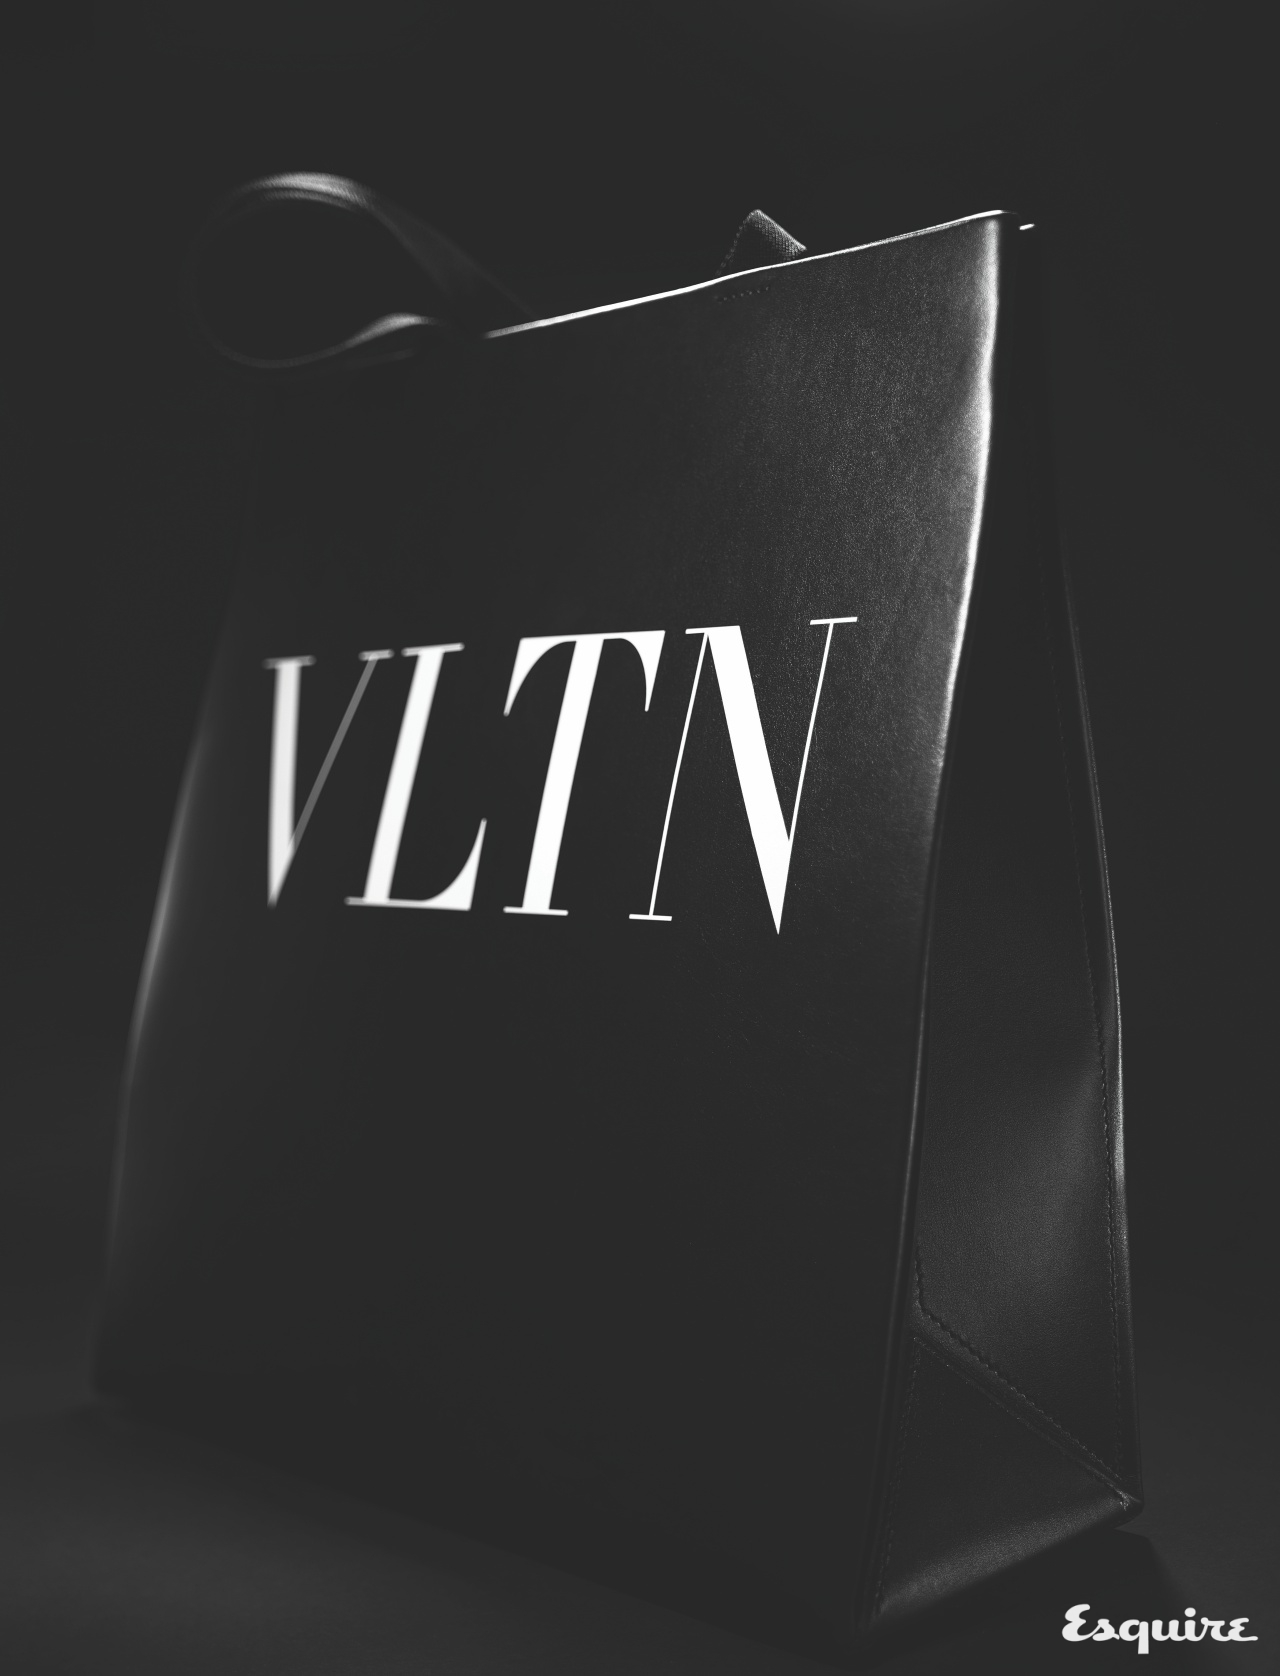 VALENTINO GARAVANI 단단한 구조로 디자인된 가죽 쇼퍼백. VLTN 로고가 명료하고 모던하다. 154만원 발렌티노 가라바니. 